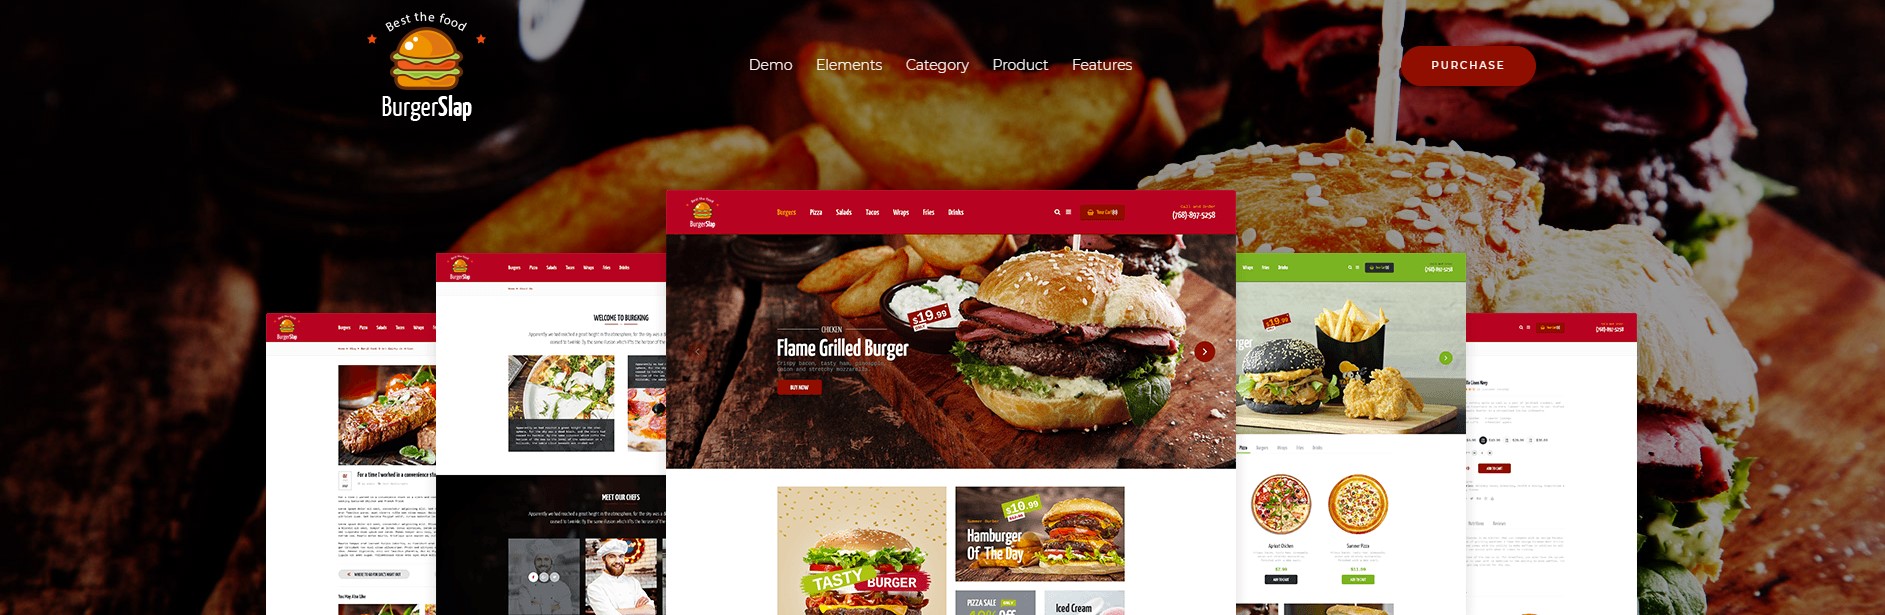 Burger Slap – Fast Food Restaurant WordPress Theme